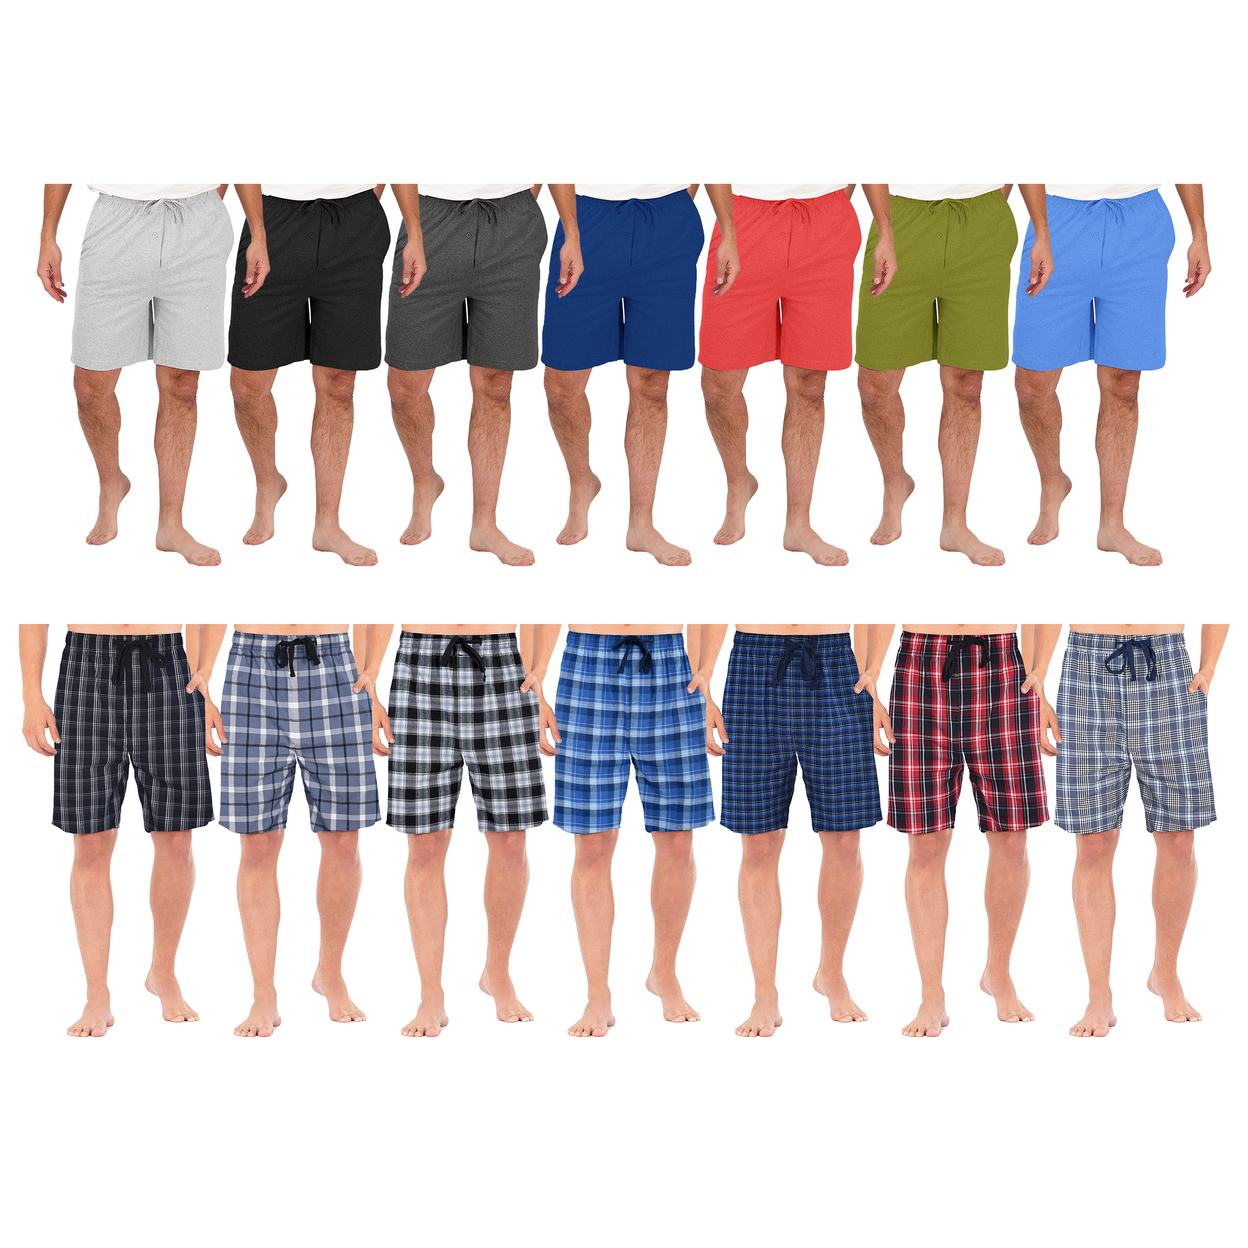 3-Pack: Men's Ultra Soft Knit Lounge Pajama Sleep Shorts - Plaid, X-large